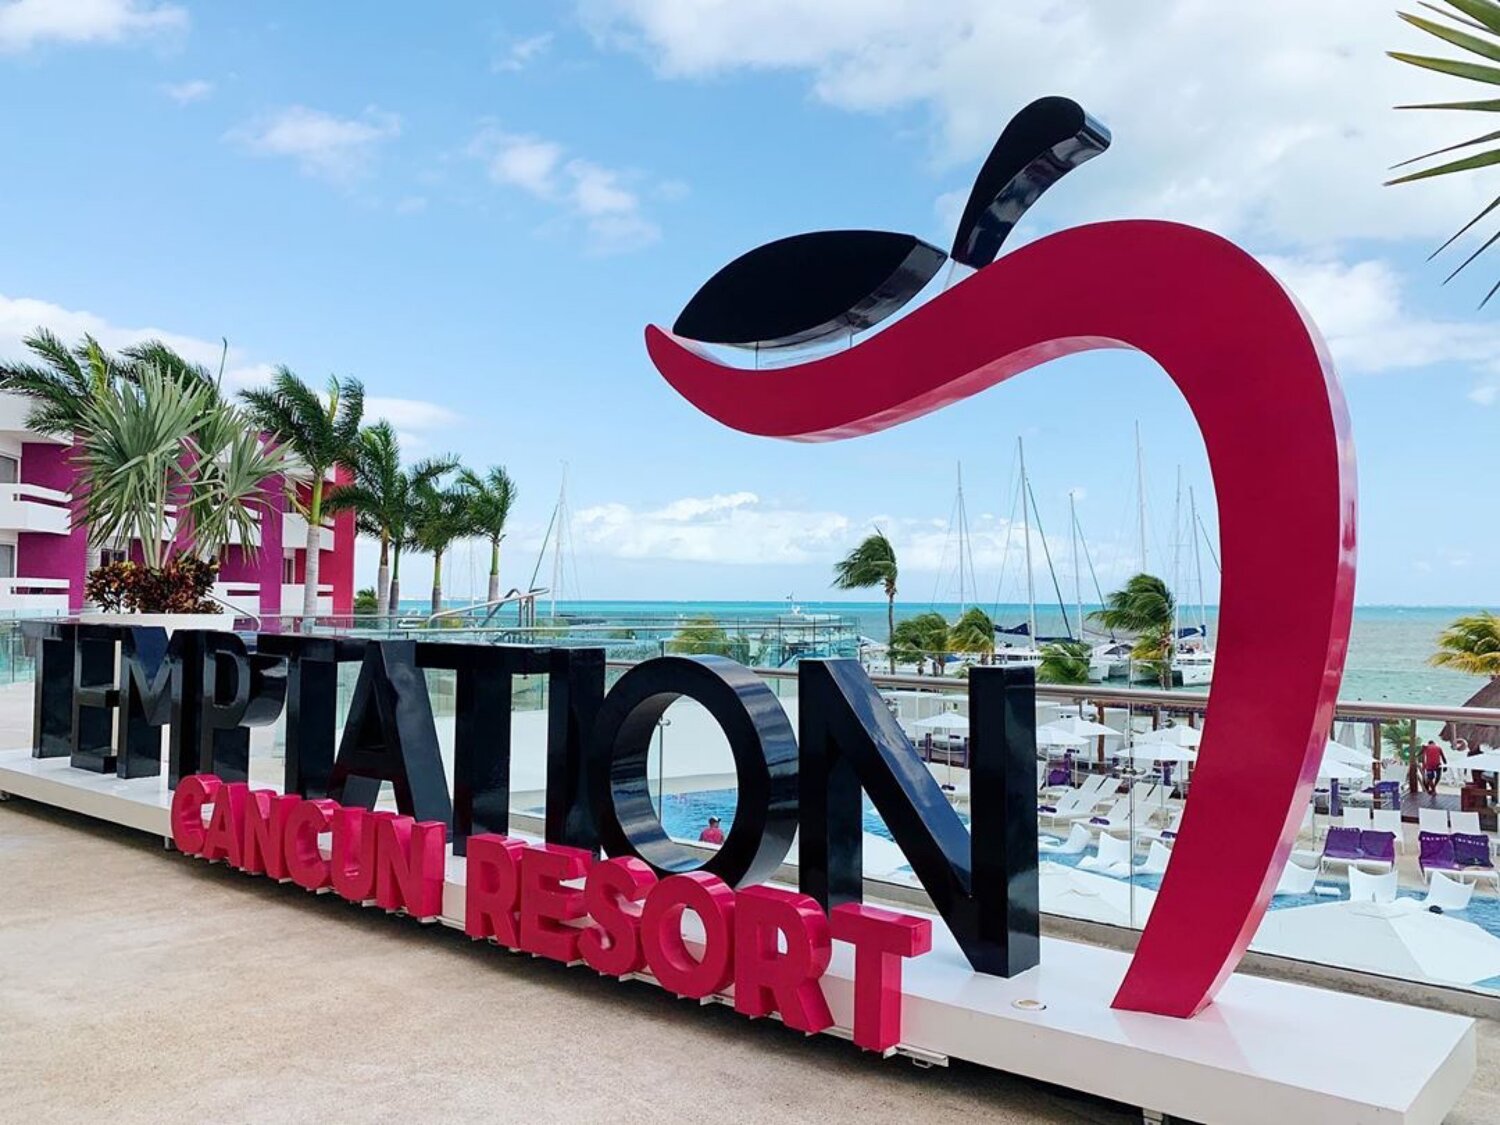 Take a peek inside the topless optional Temptation Cancun Resort. 